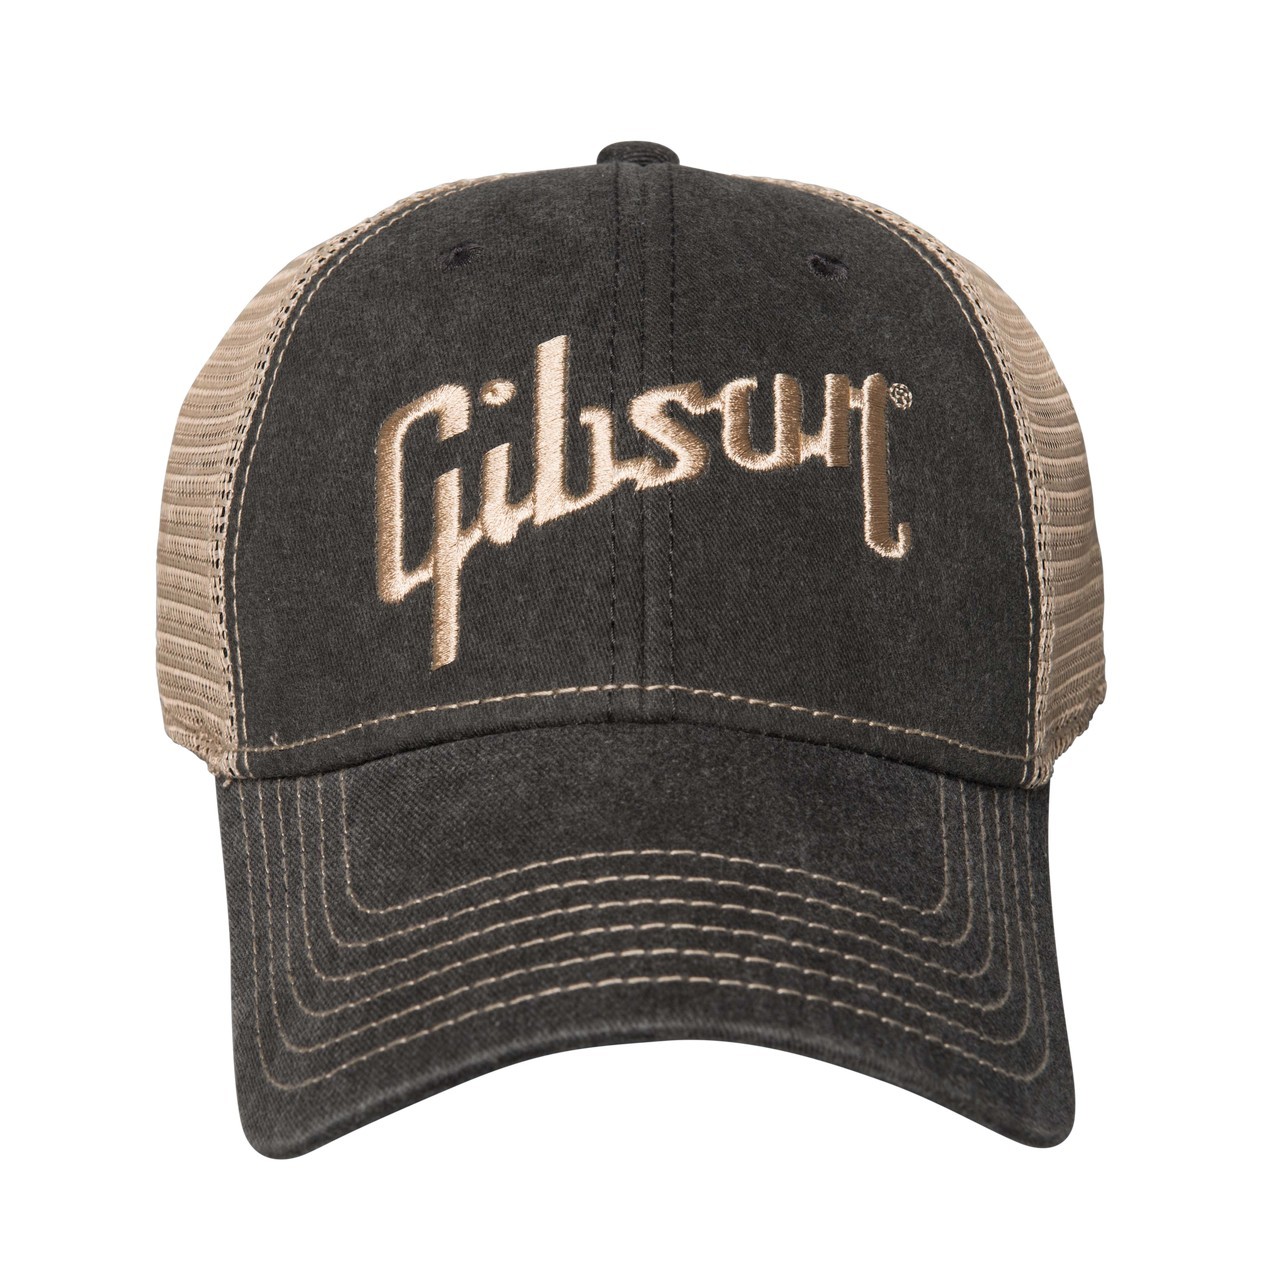 GIBSON Faded Denim Hat